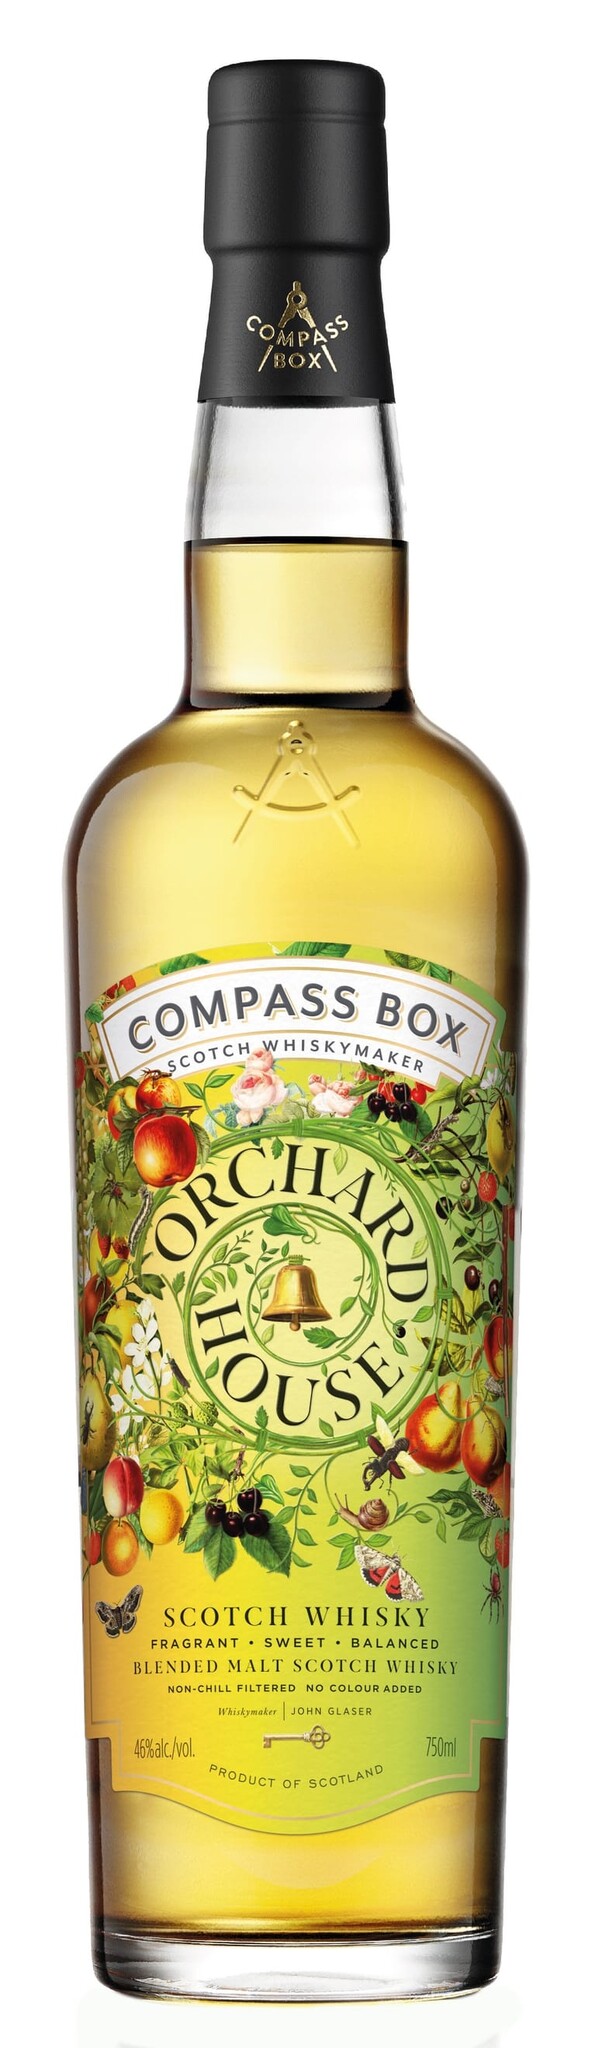 Compass Box "Orchard House" Blended Malt Scotch Whisky 750ml